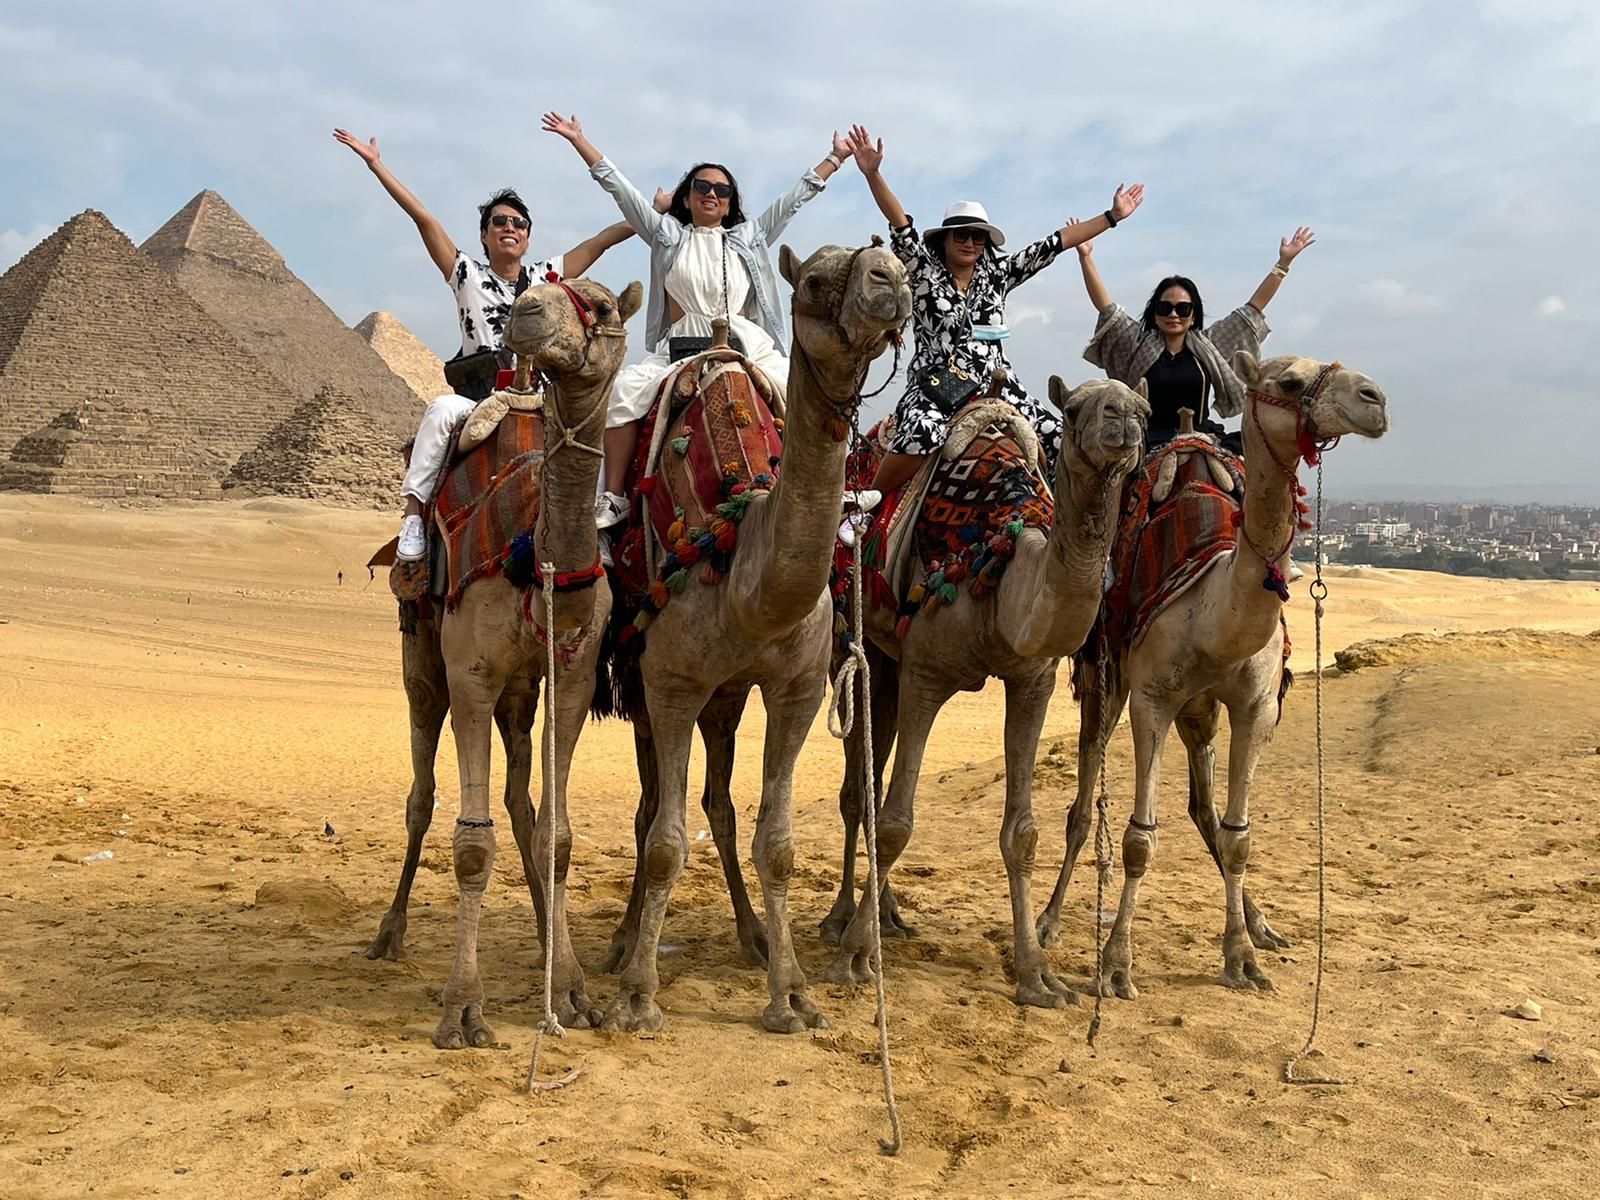 tours of jordan and egypt